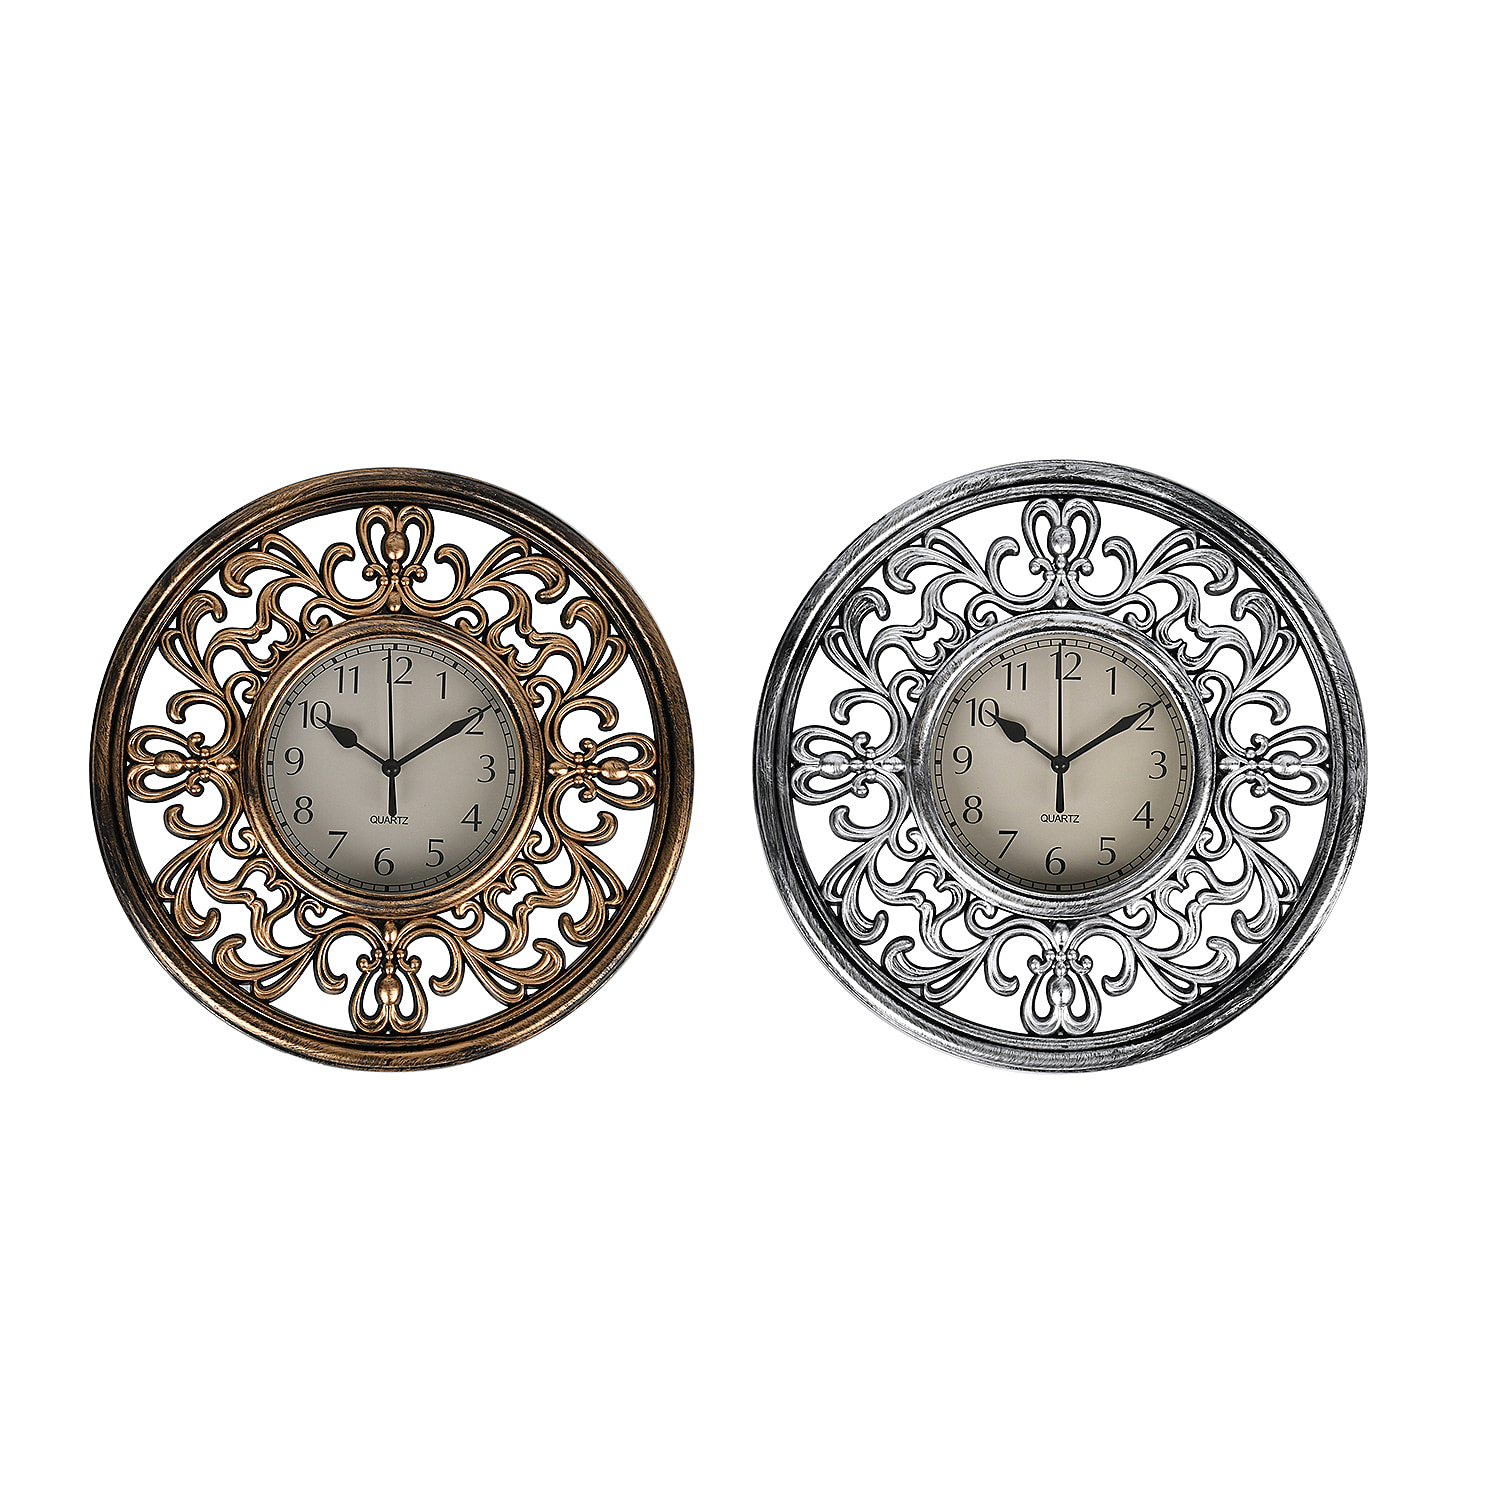 Set of 2 Round Retro Design Analog Wall Clock - Brown & Silver